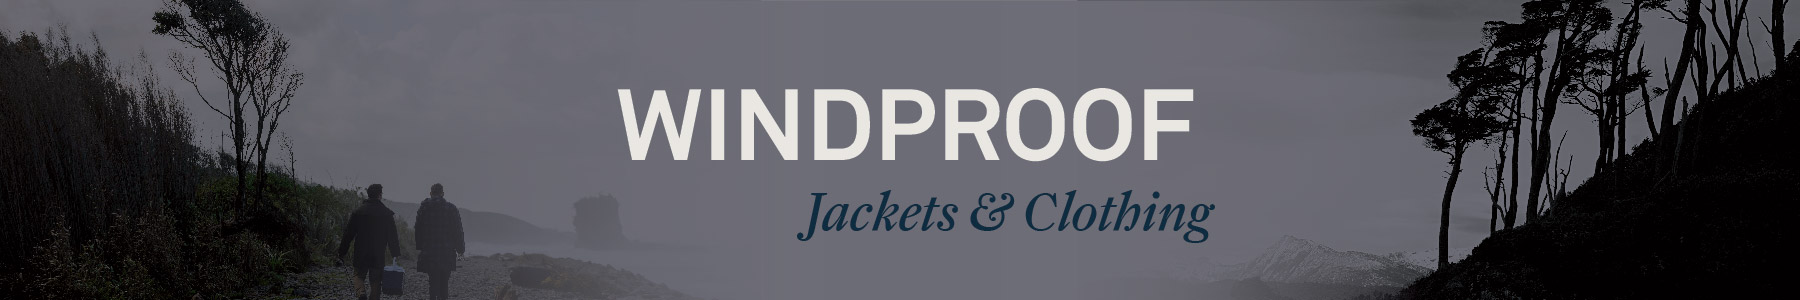 Windproof Jackets & Clothing